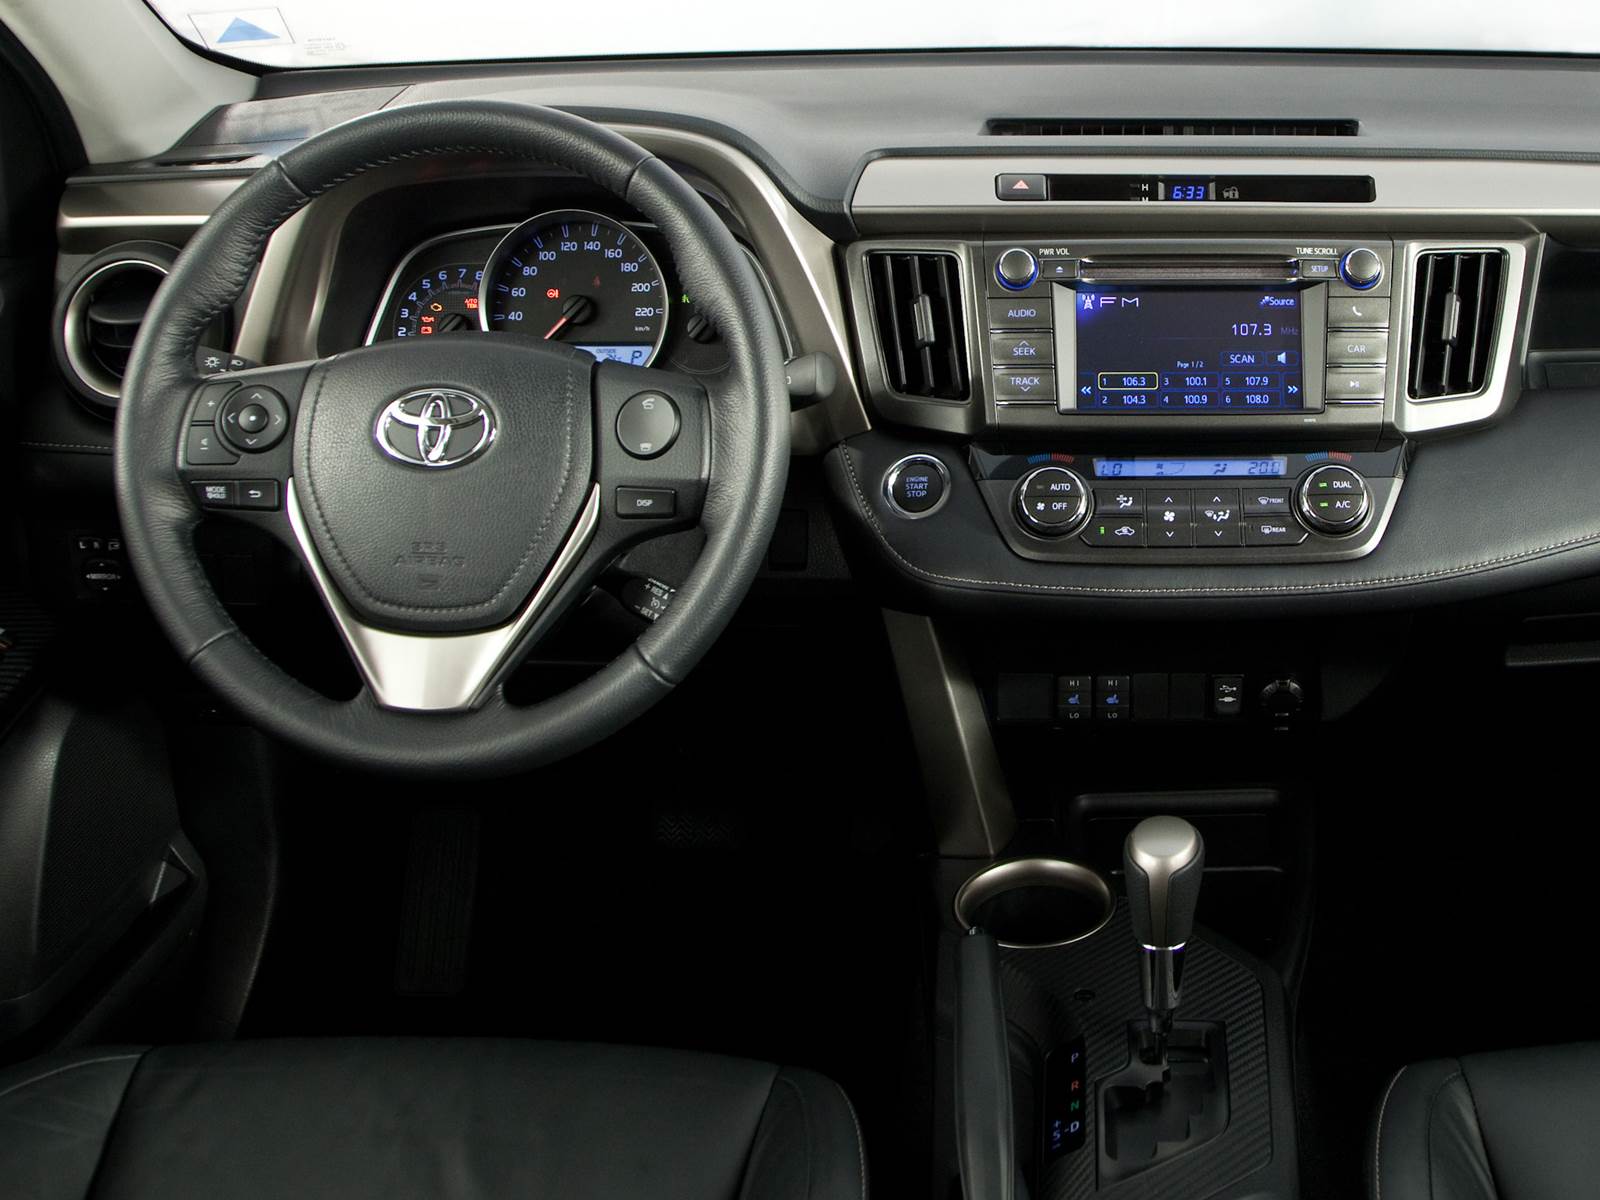 Toyota RAV4 2015 2.0 4x2 A/T - interior